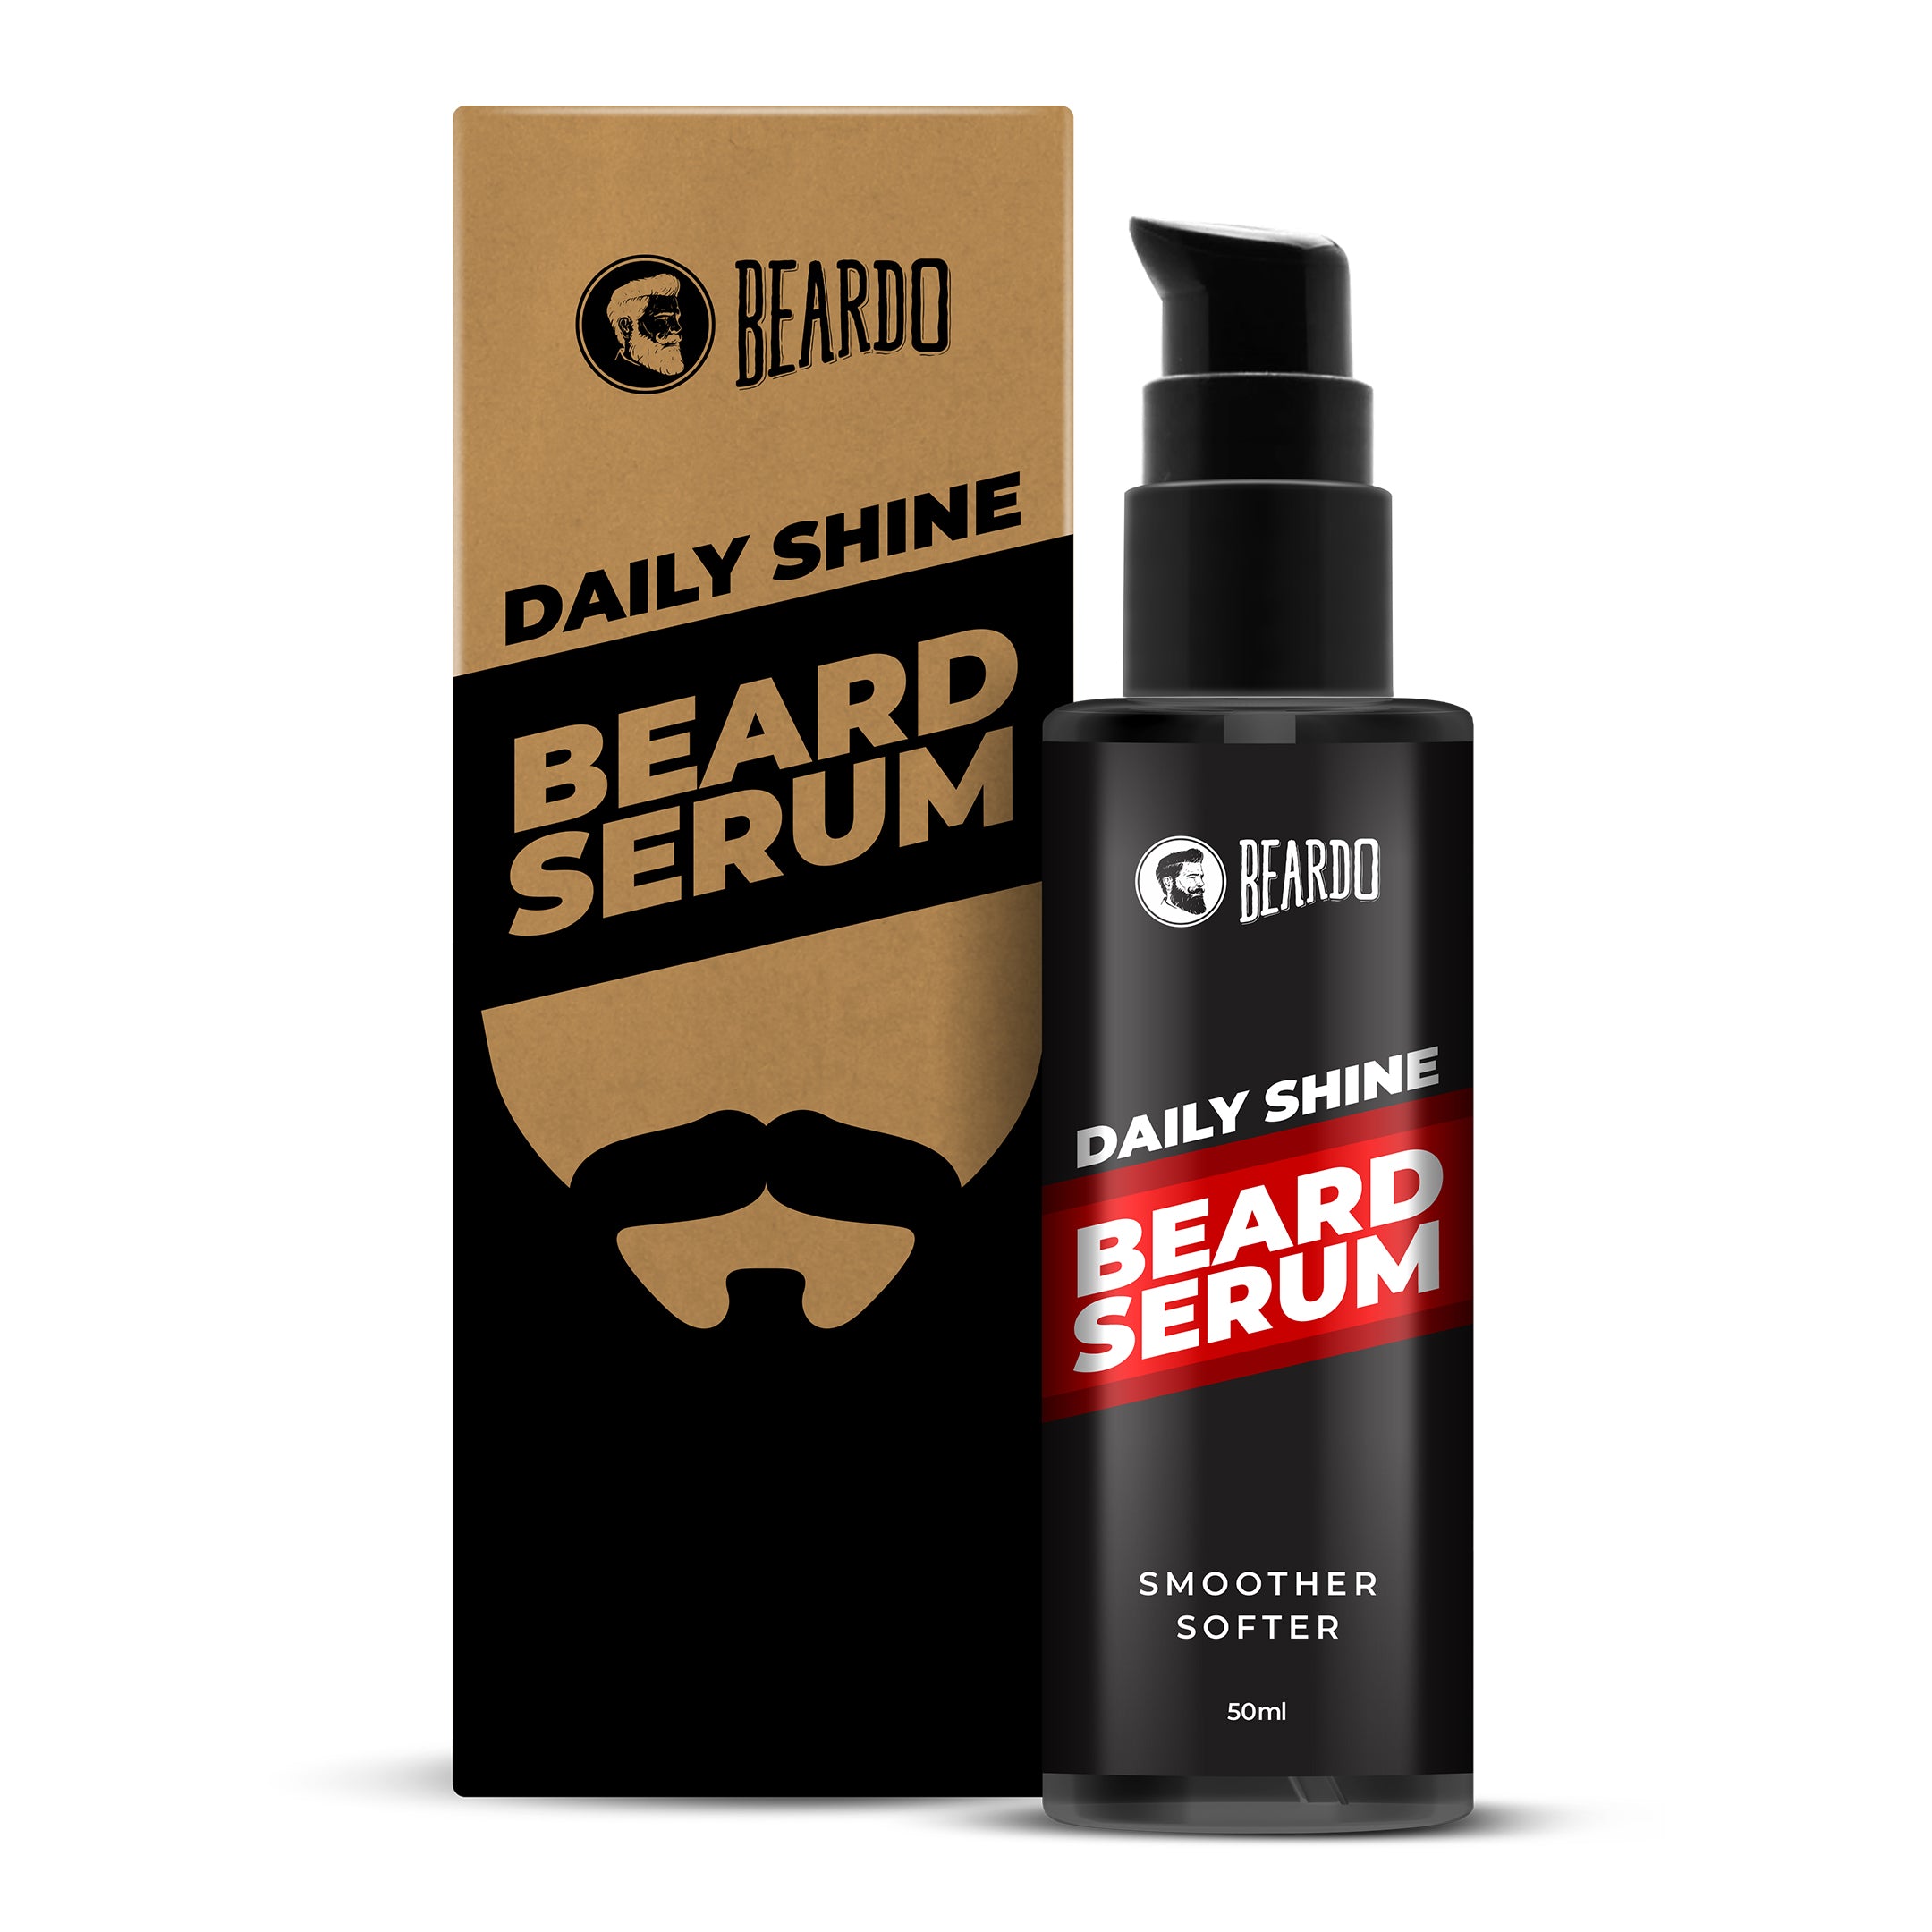 Beardo Hair Serum With Argan Oil